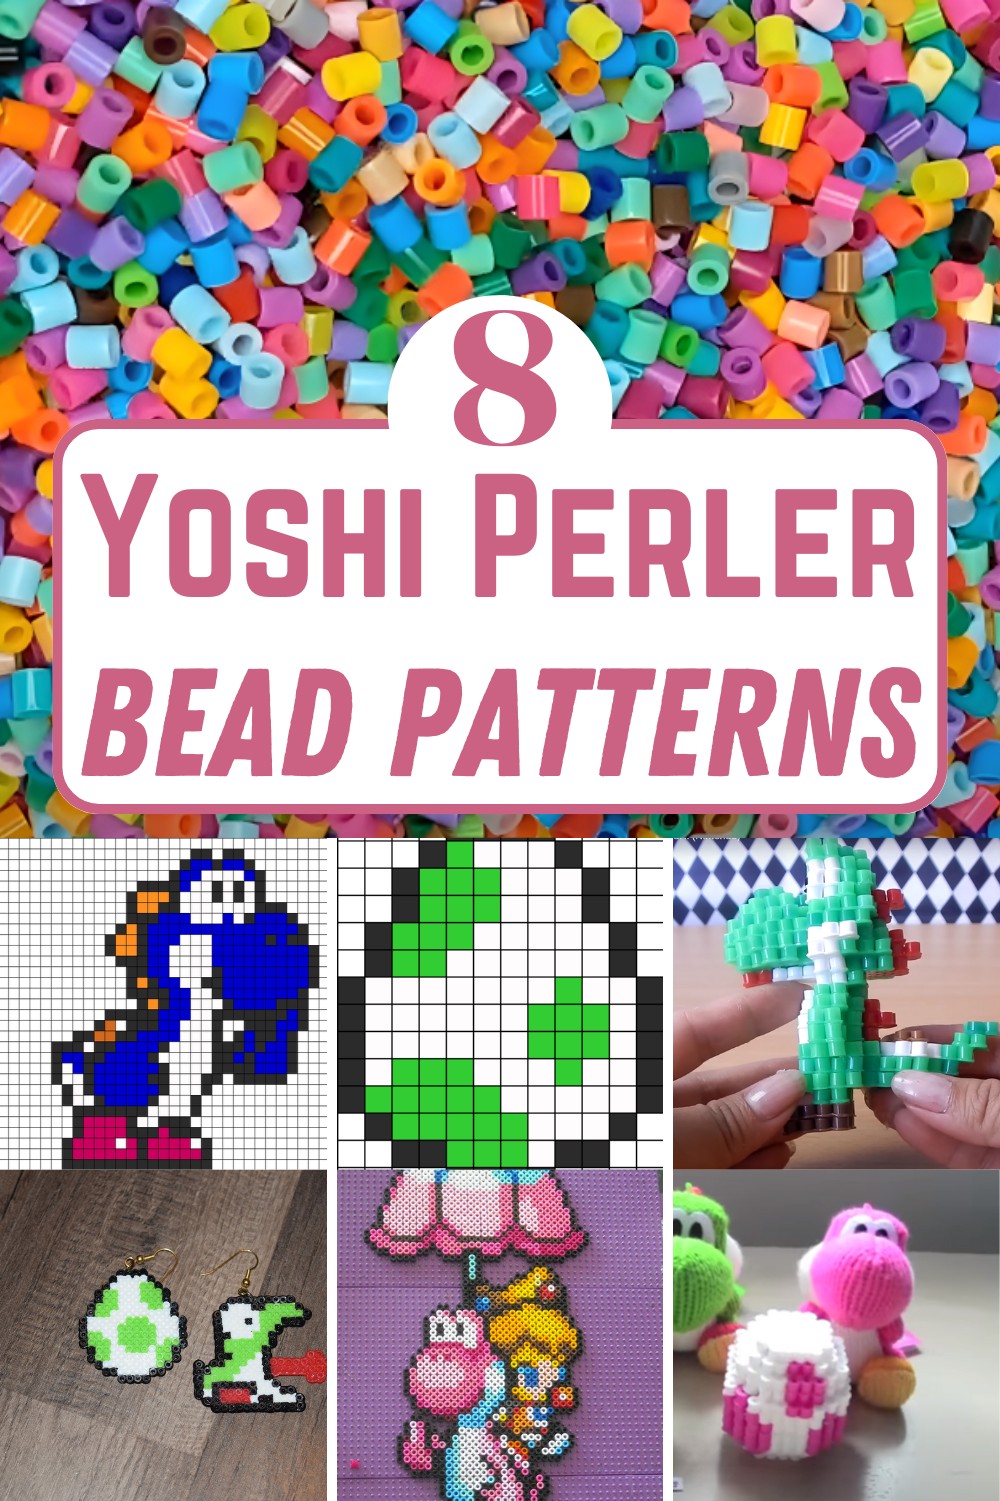 7 Nintendo Perler Bead Patterns, Characters And Designs - DIY Crafts